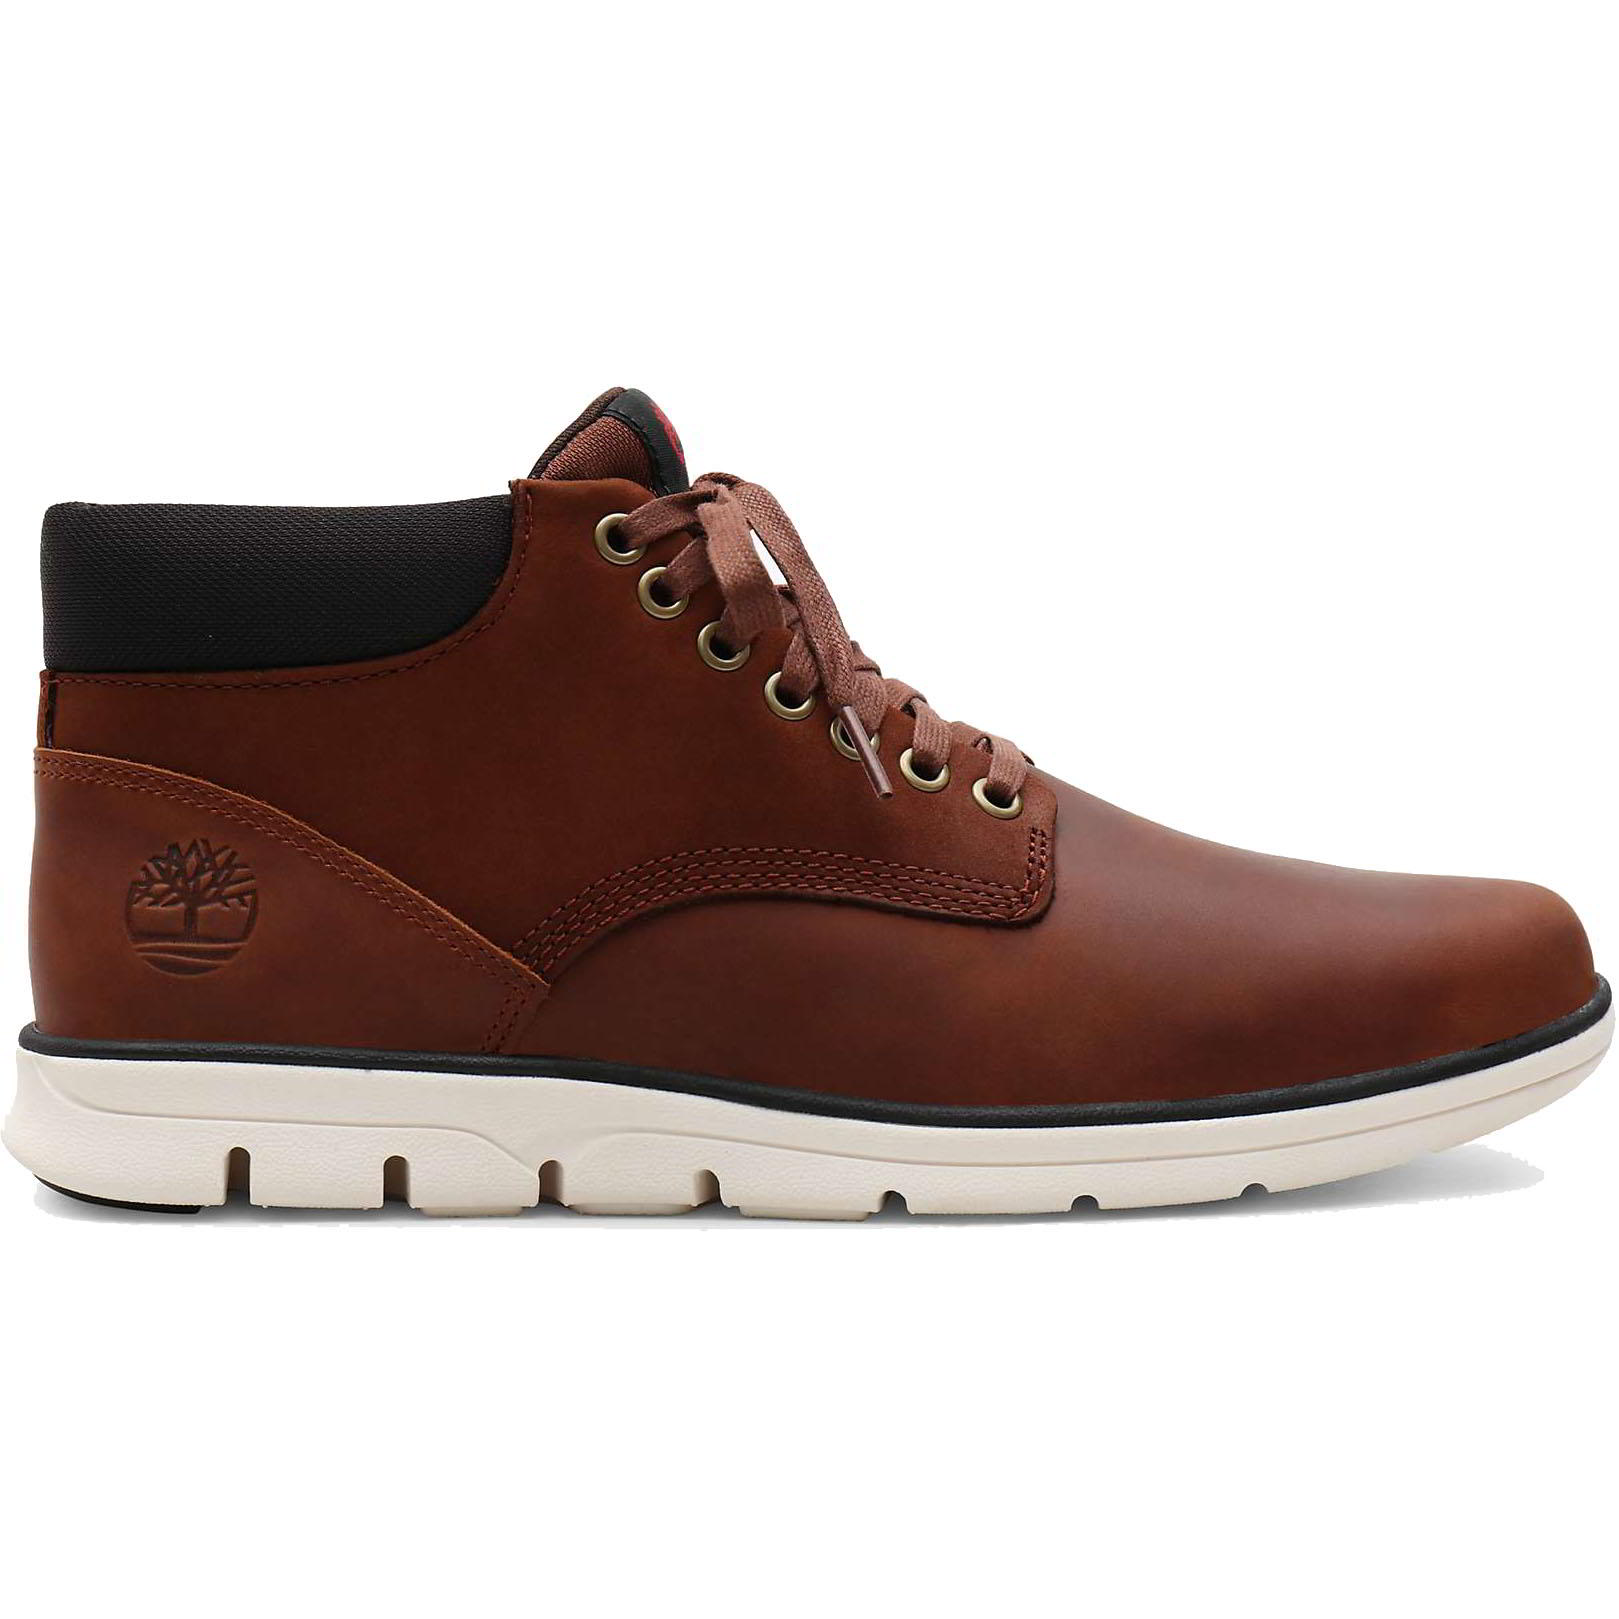 Timberland Men's Bradstreet Chukka Leather Ankle Boots - UK 7